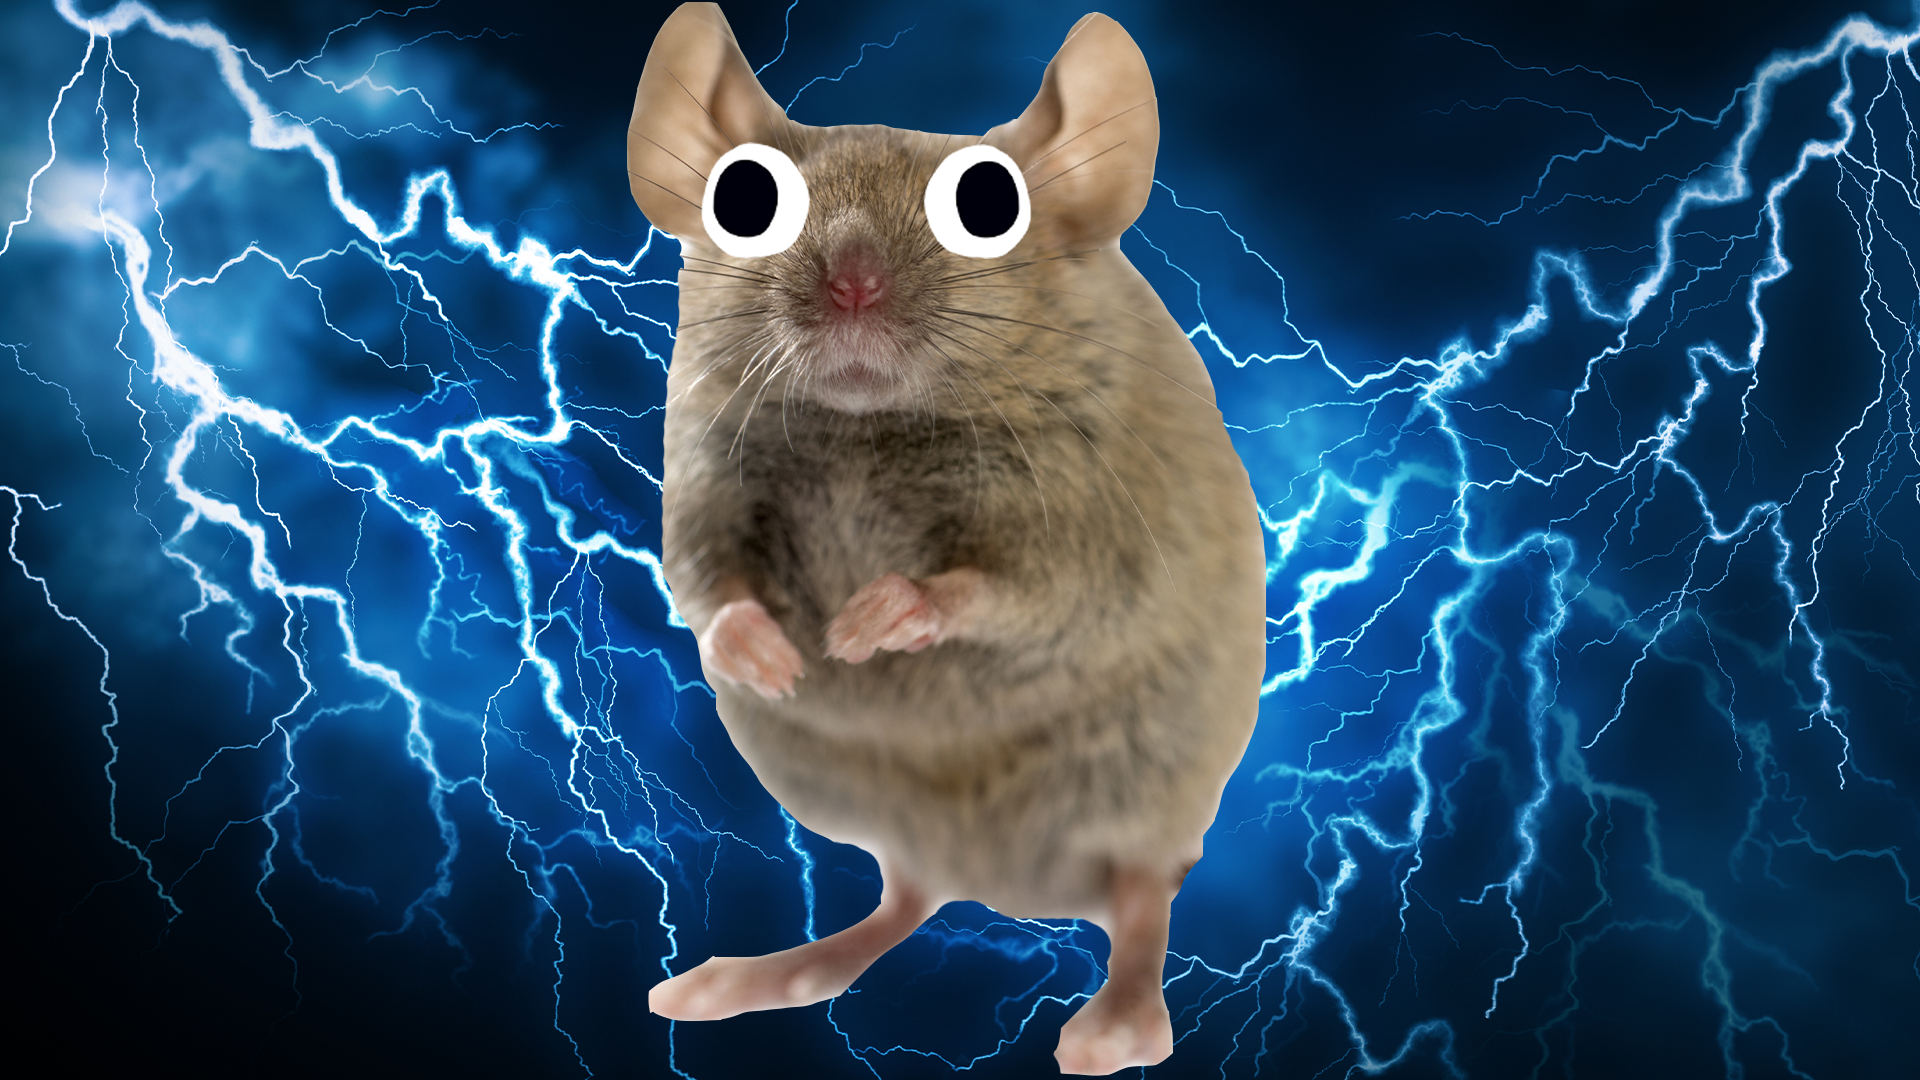 Mouse on lightning background